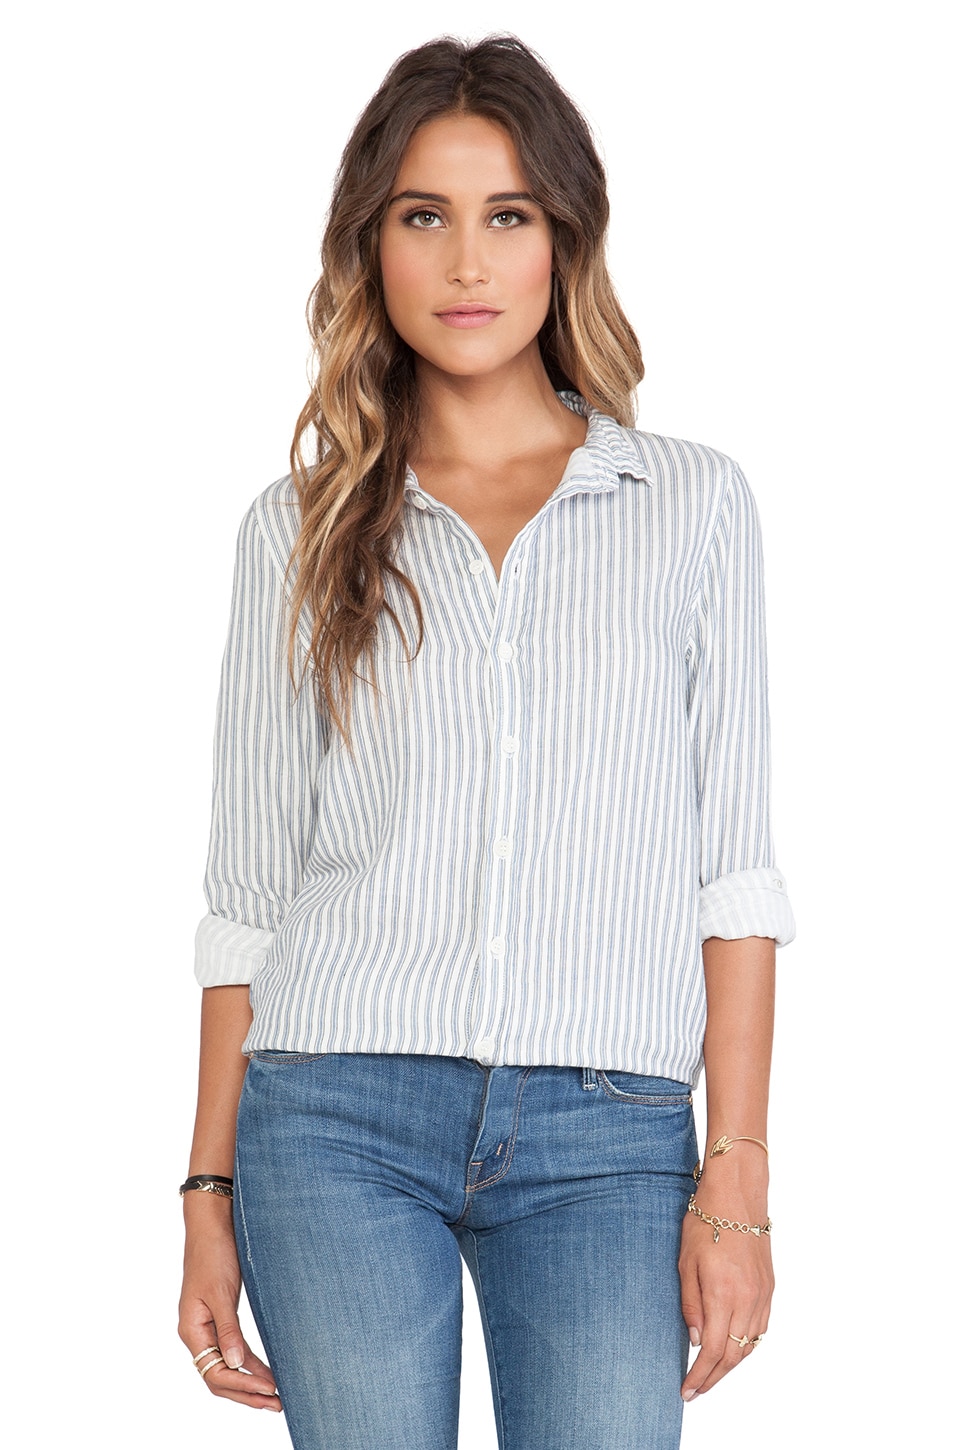 CP SHADES Carine Shirt in Blue & White Stripe | REVOLVE